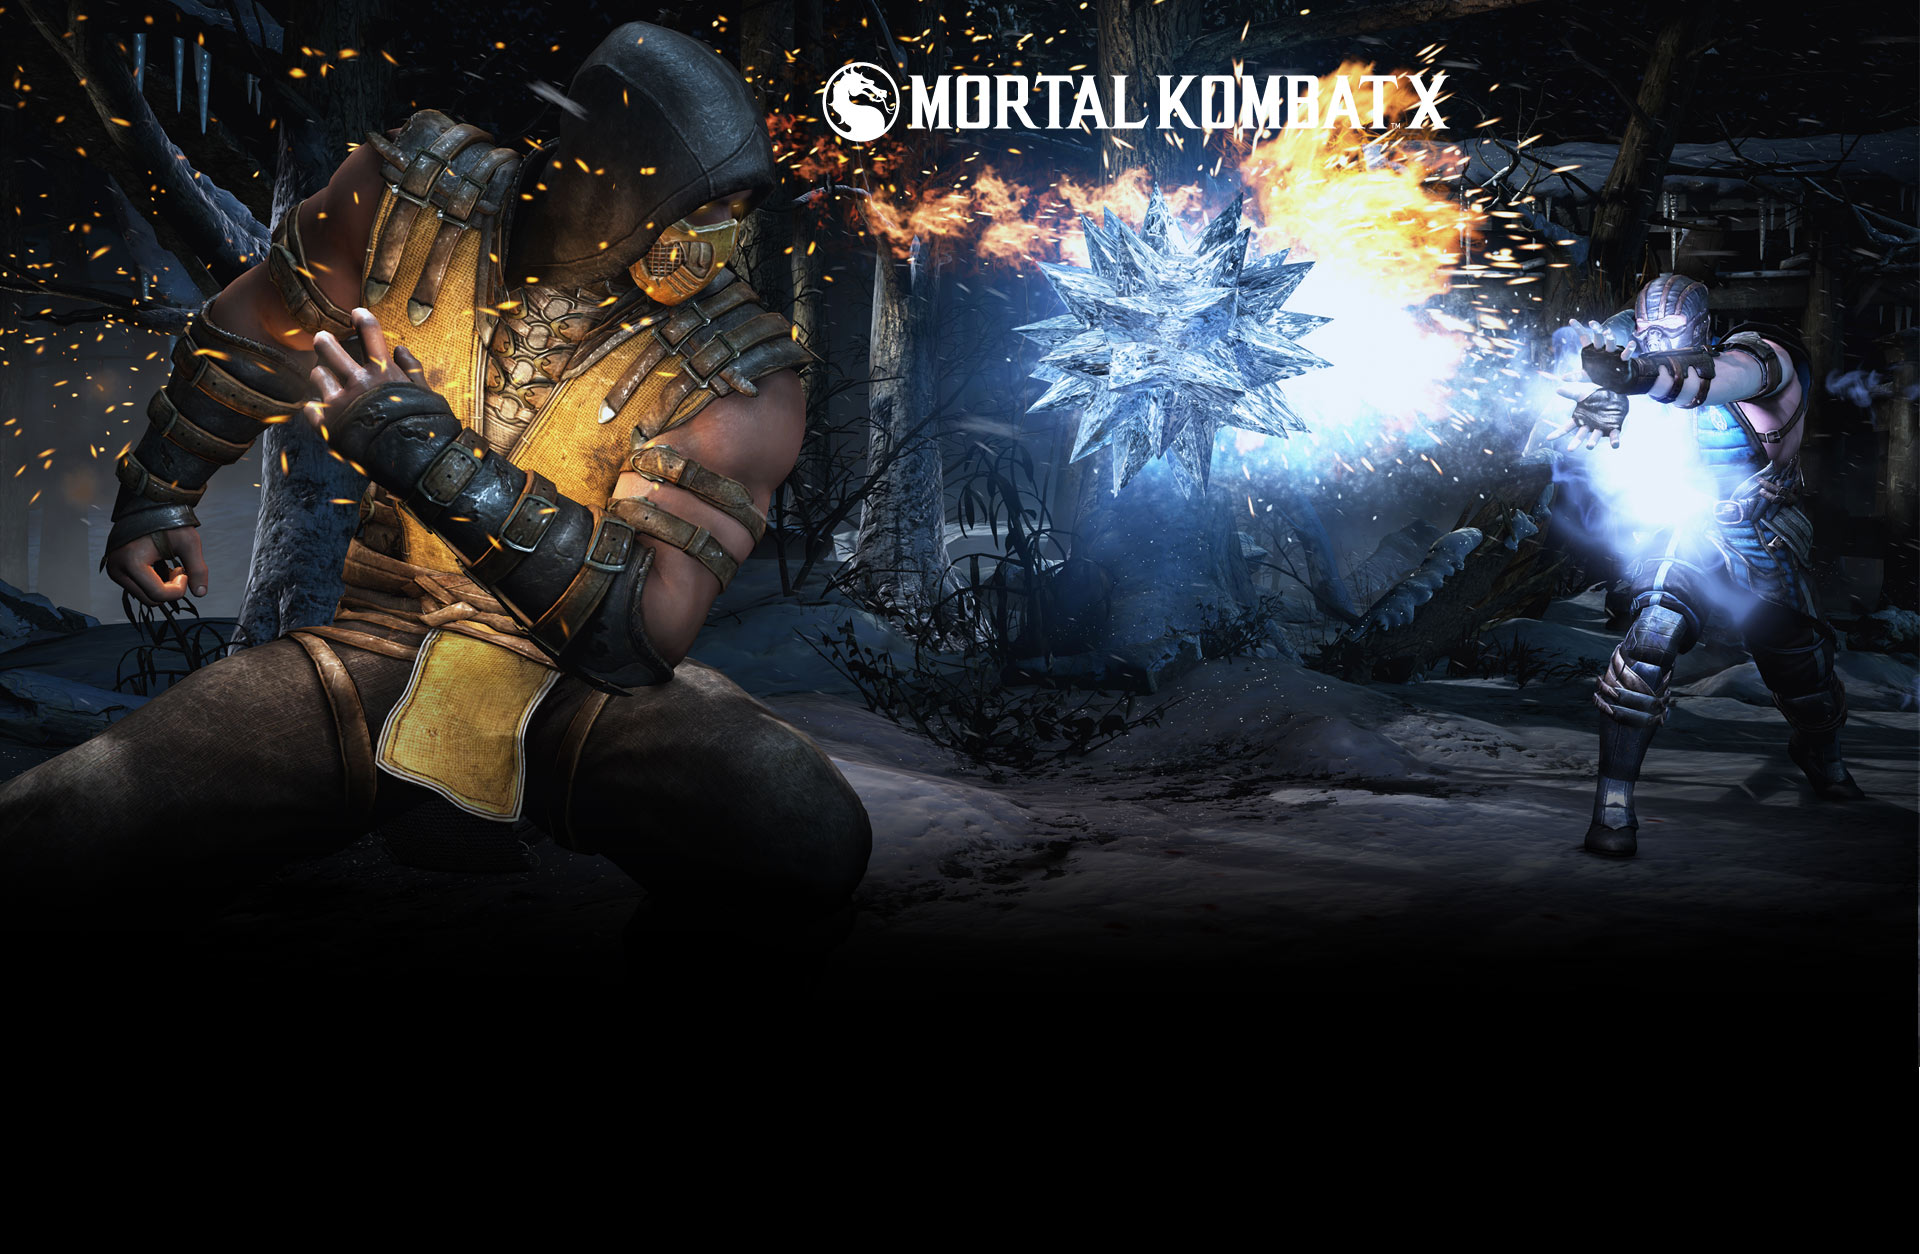 Mortal Kombat X - Kombat pack (DLC)